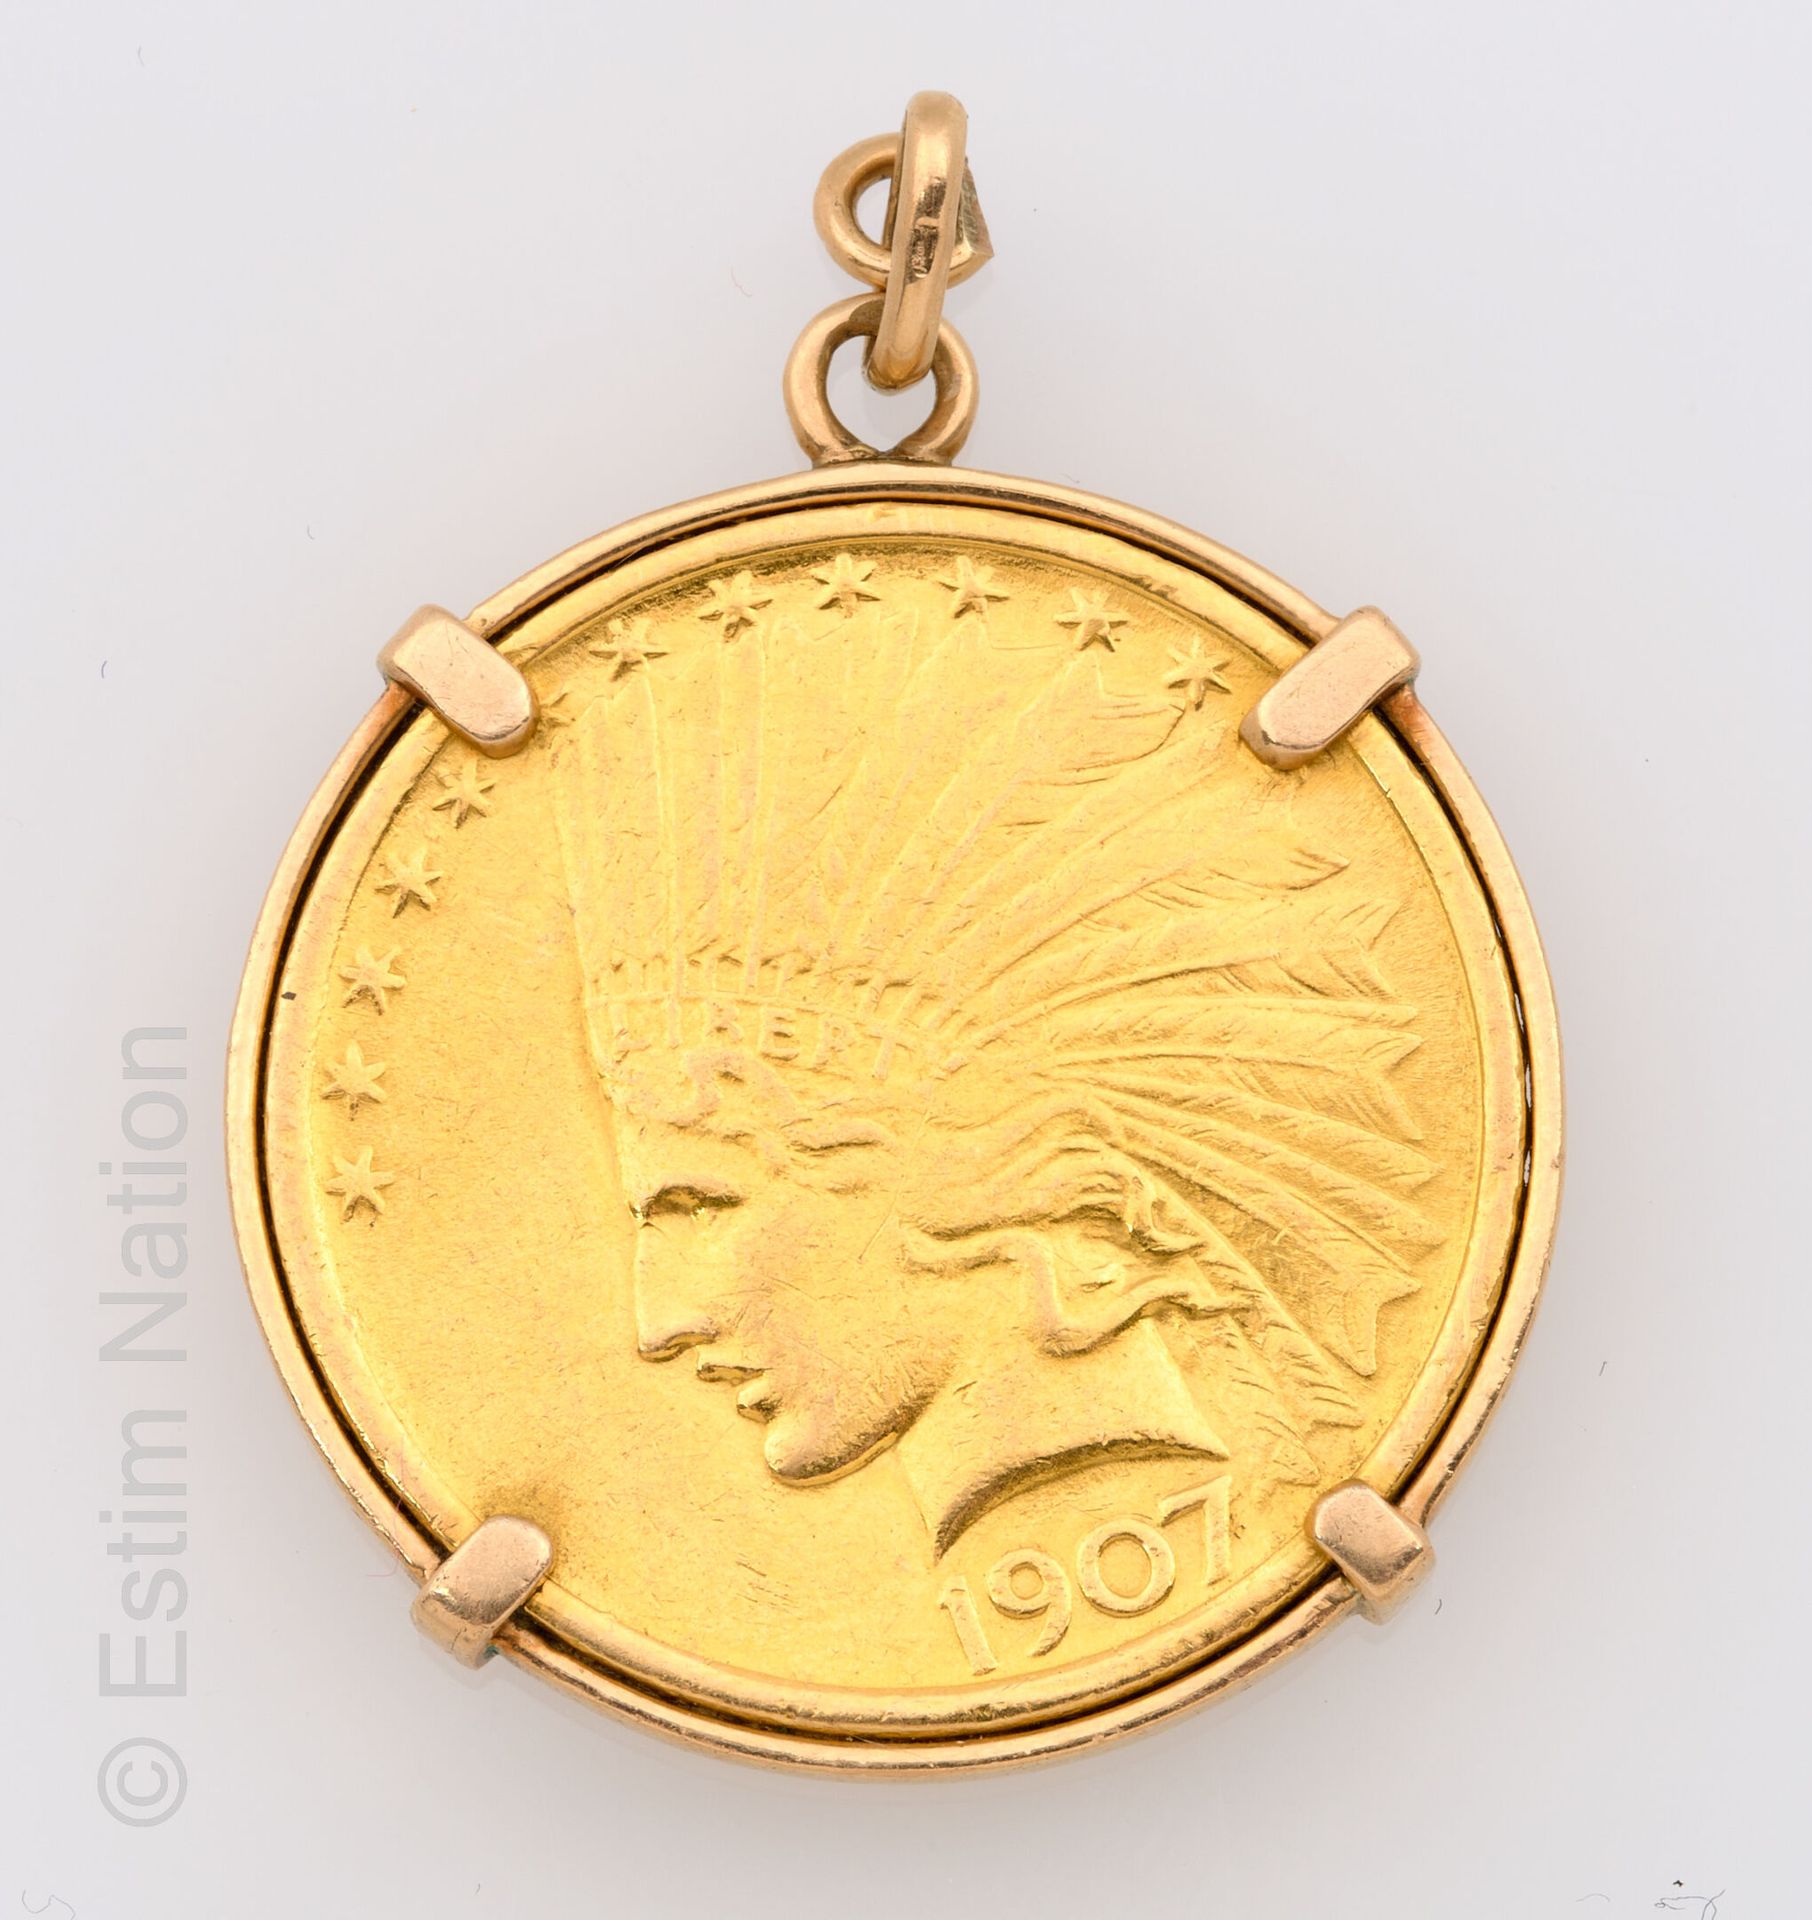 PENDENTIF PIECE 10 DOLLARS 一枚18K（750千分之一）黄金吊坠，中心是一枚10美元的金币，1907年。 
毛重：19克。